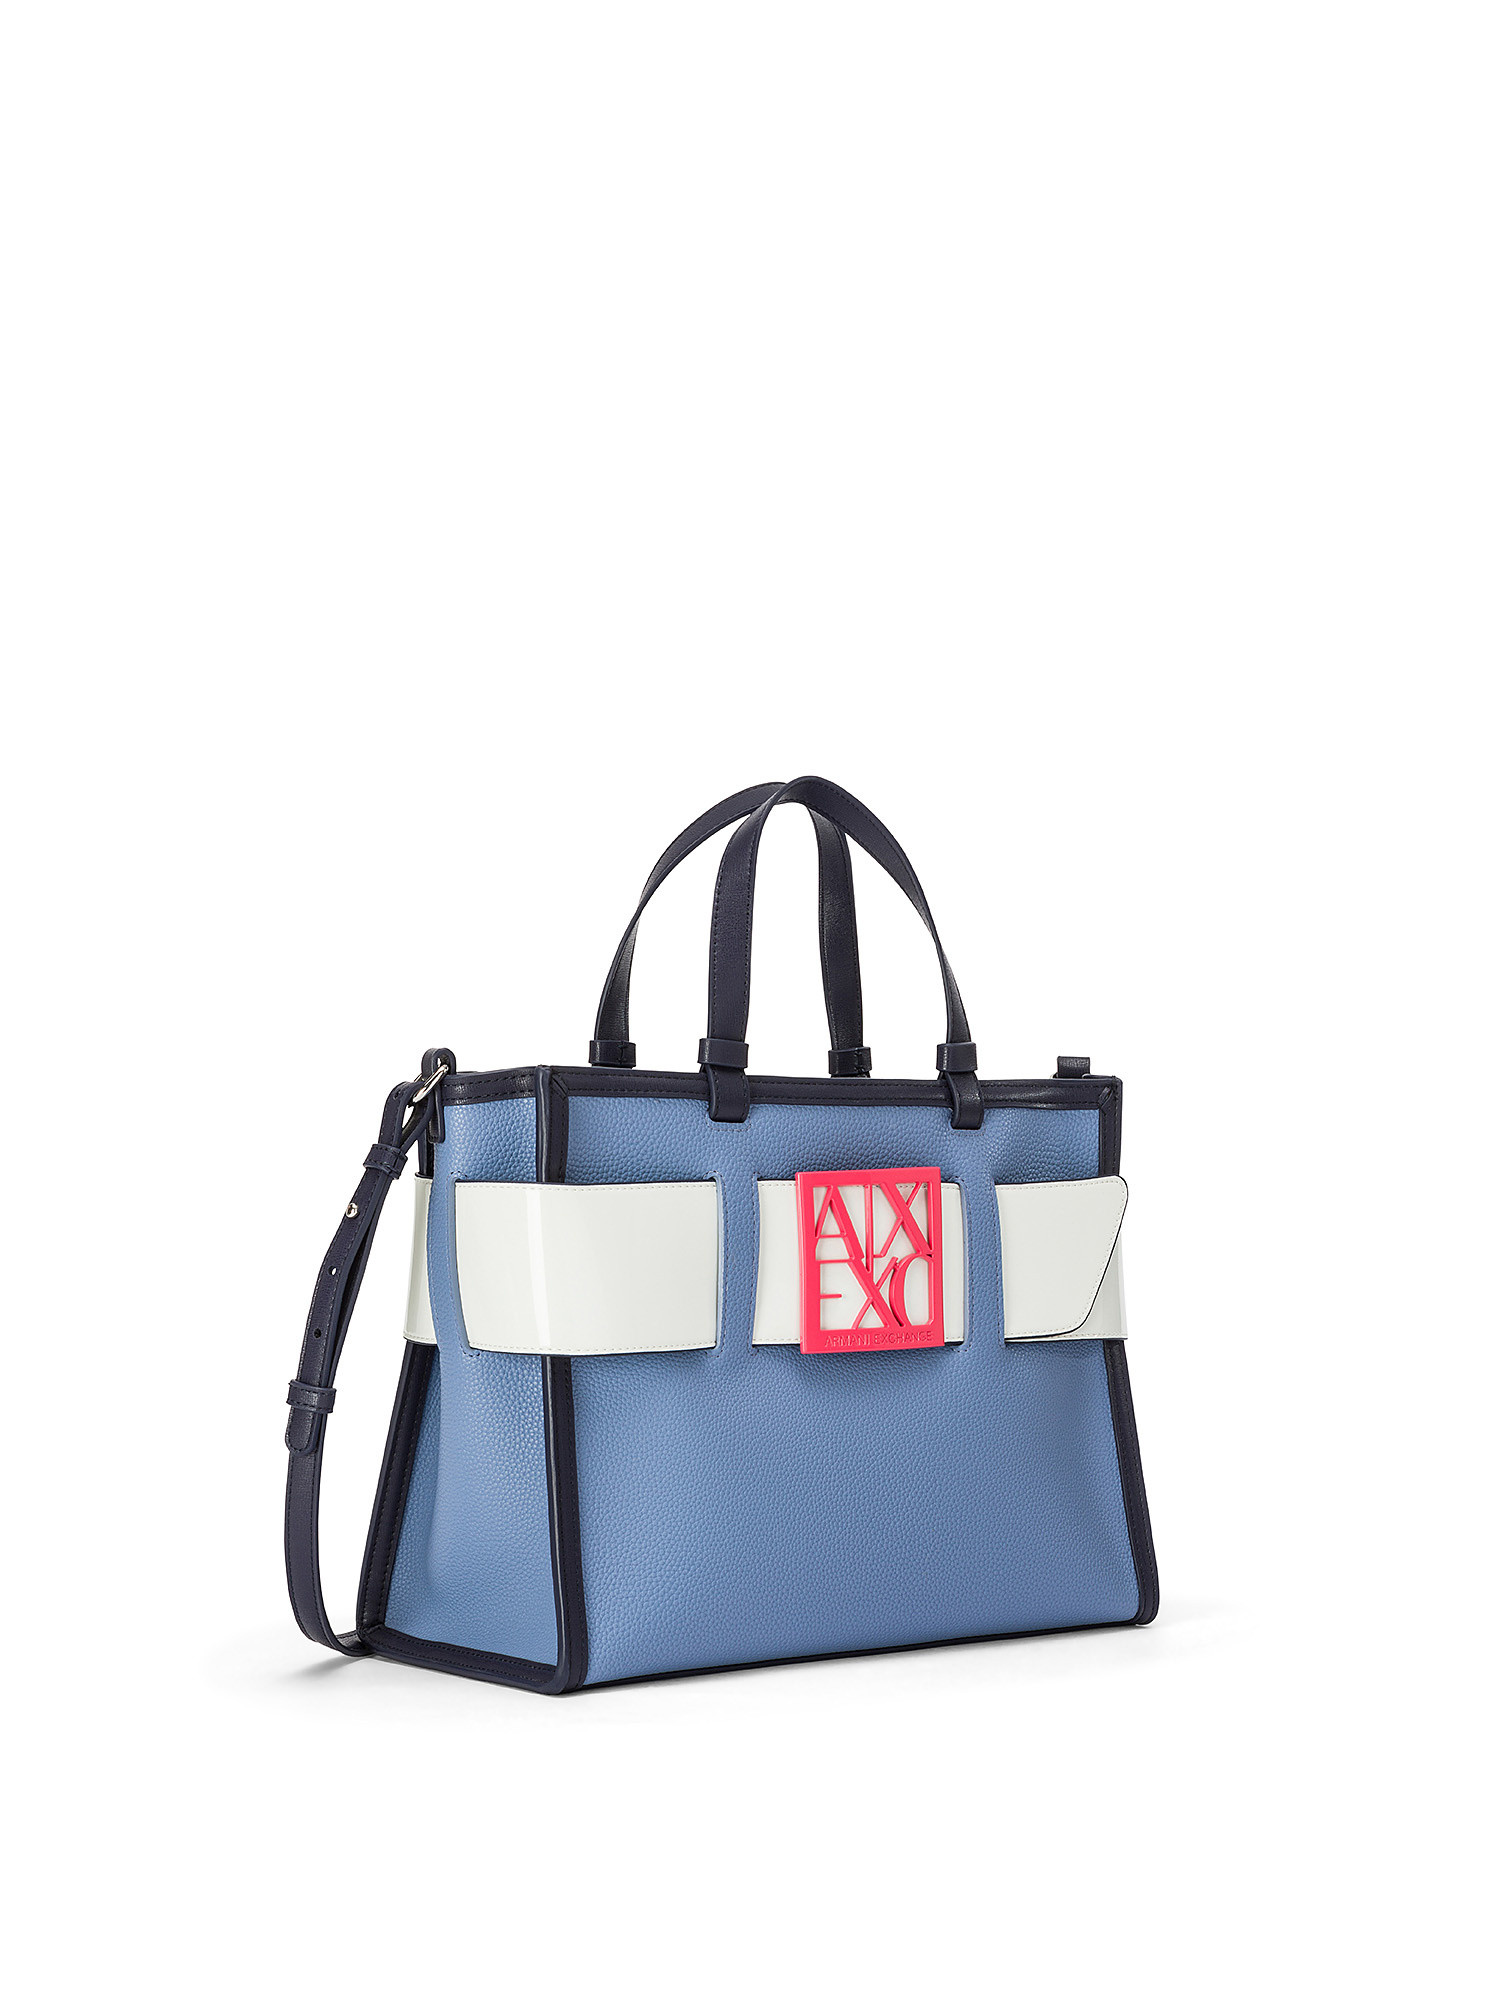 Armani Exchange - Large tote bag with logo, Light Blue, large image number 1